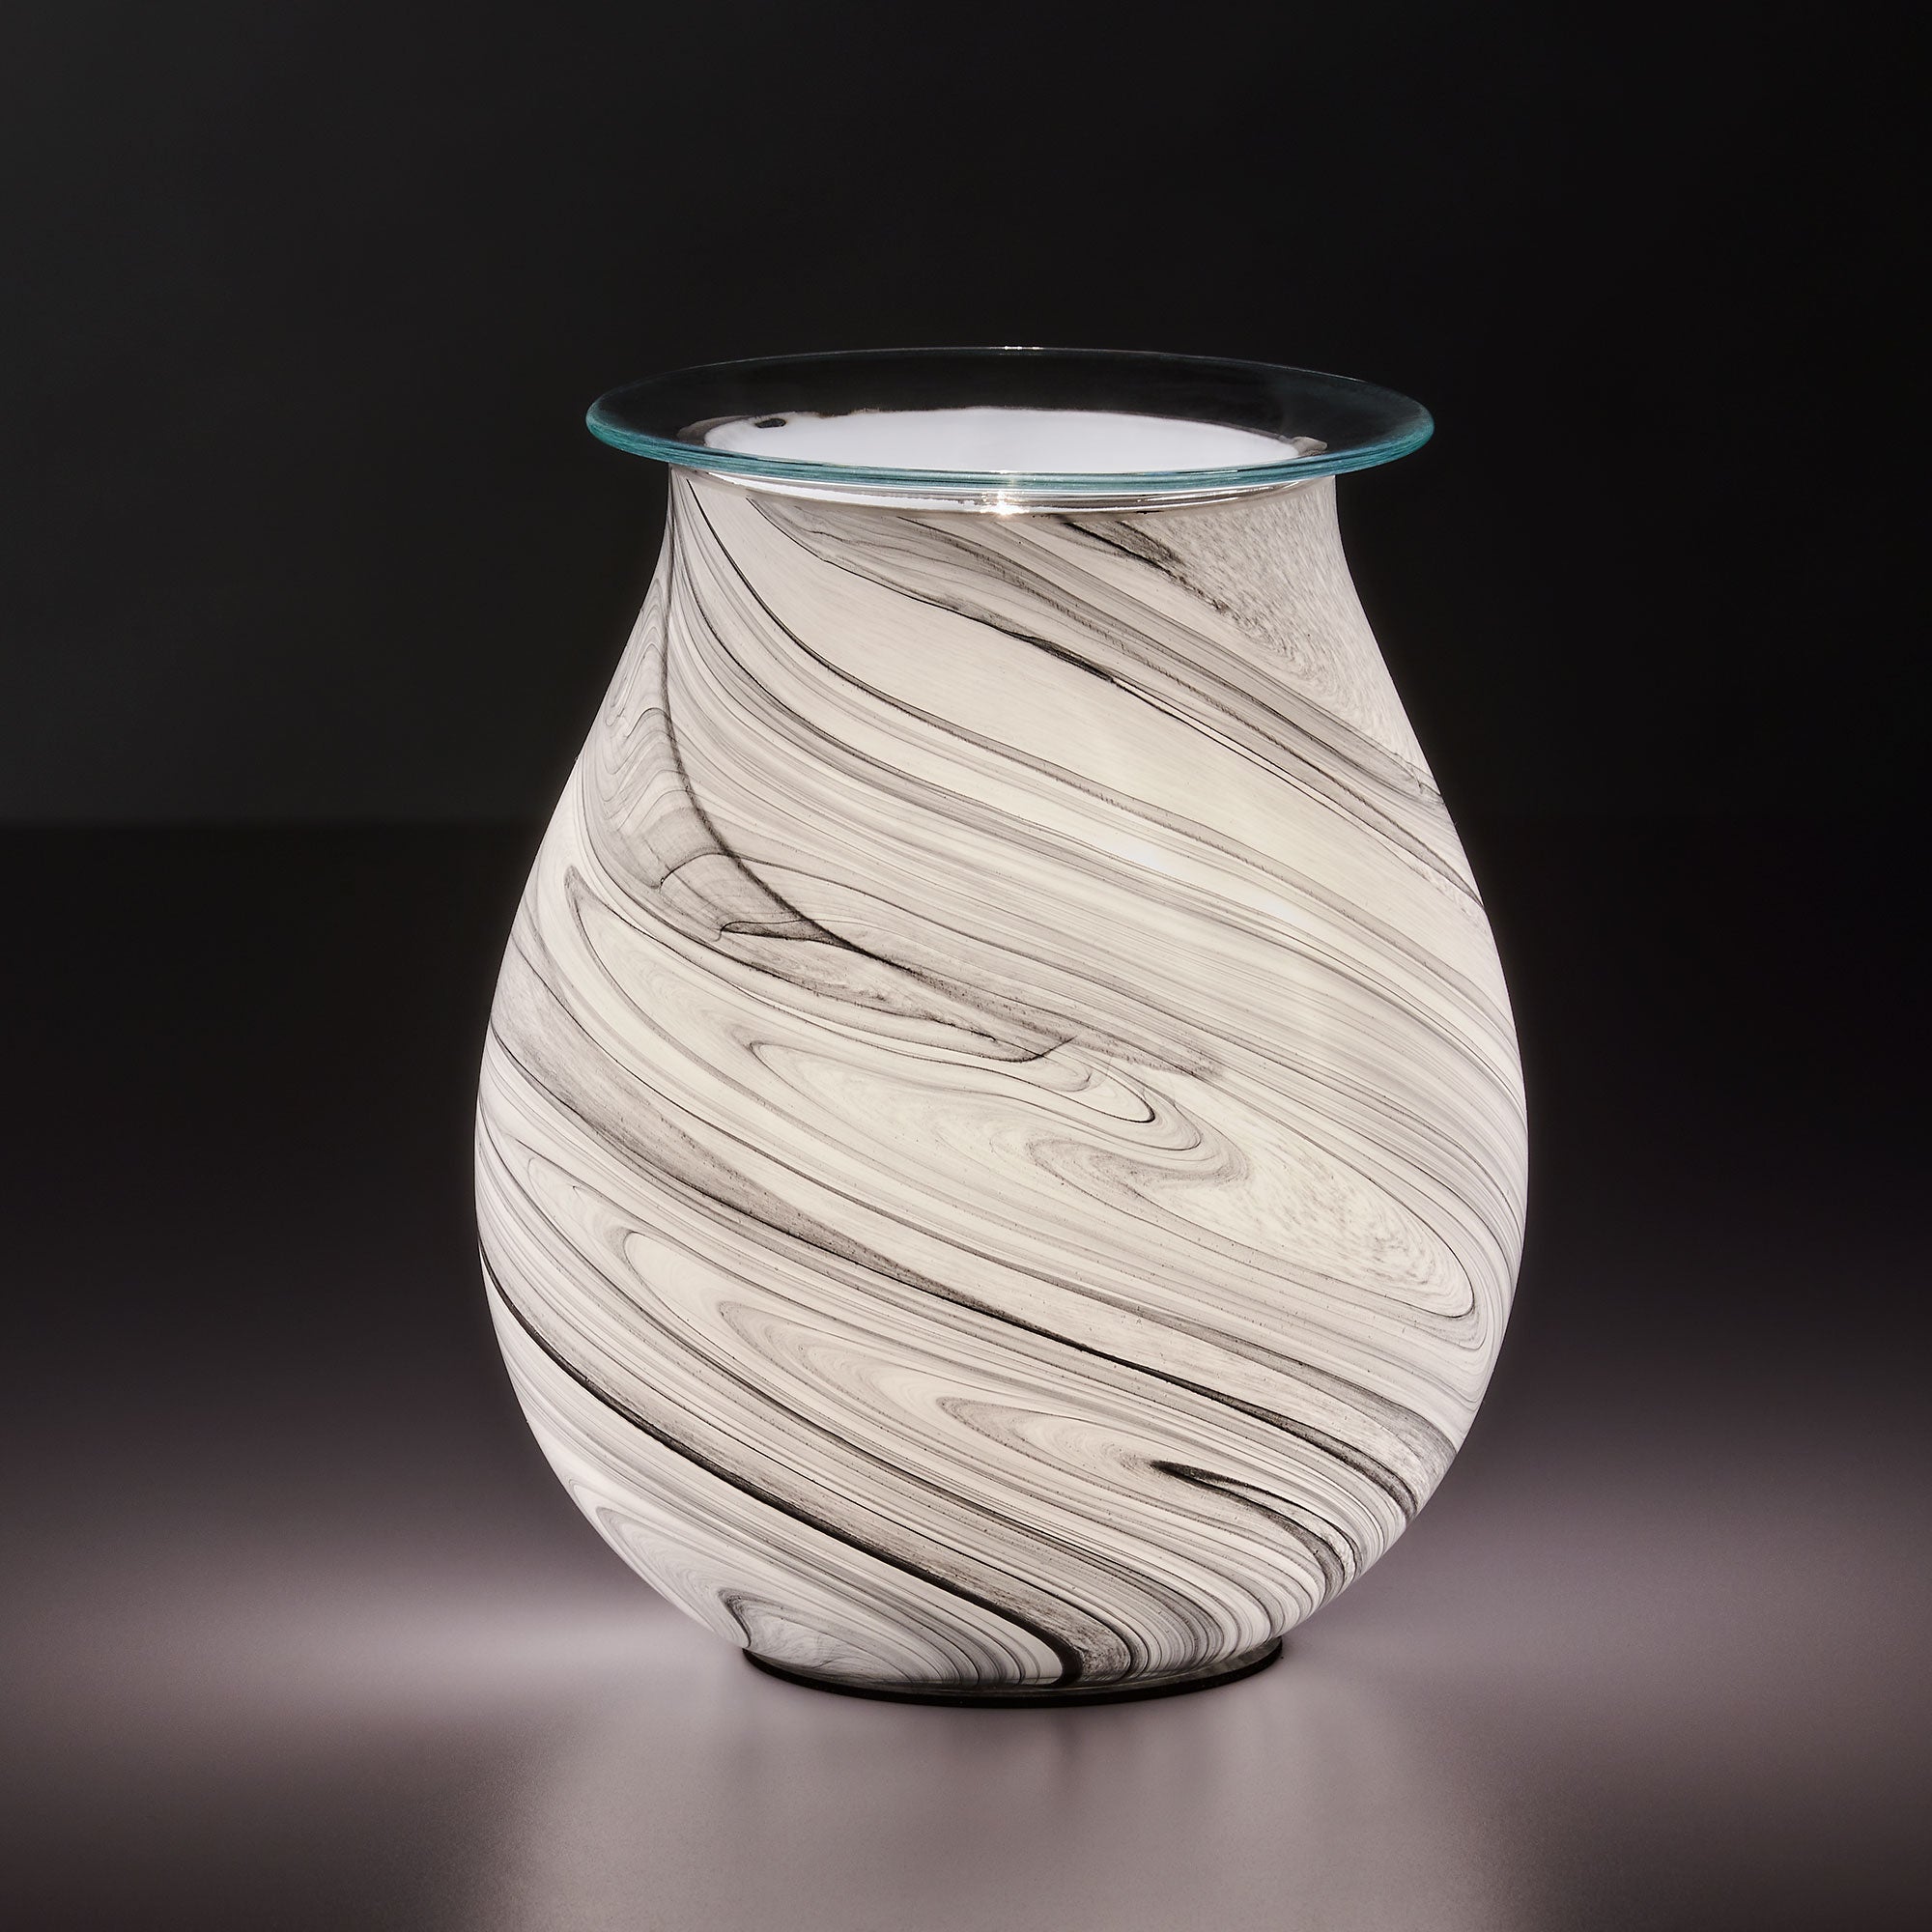 Wax Melt Warmer - Black & White - Aspire Art Glass